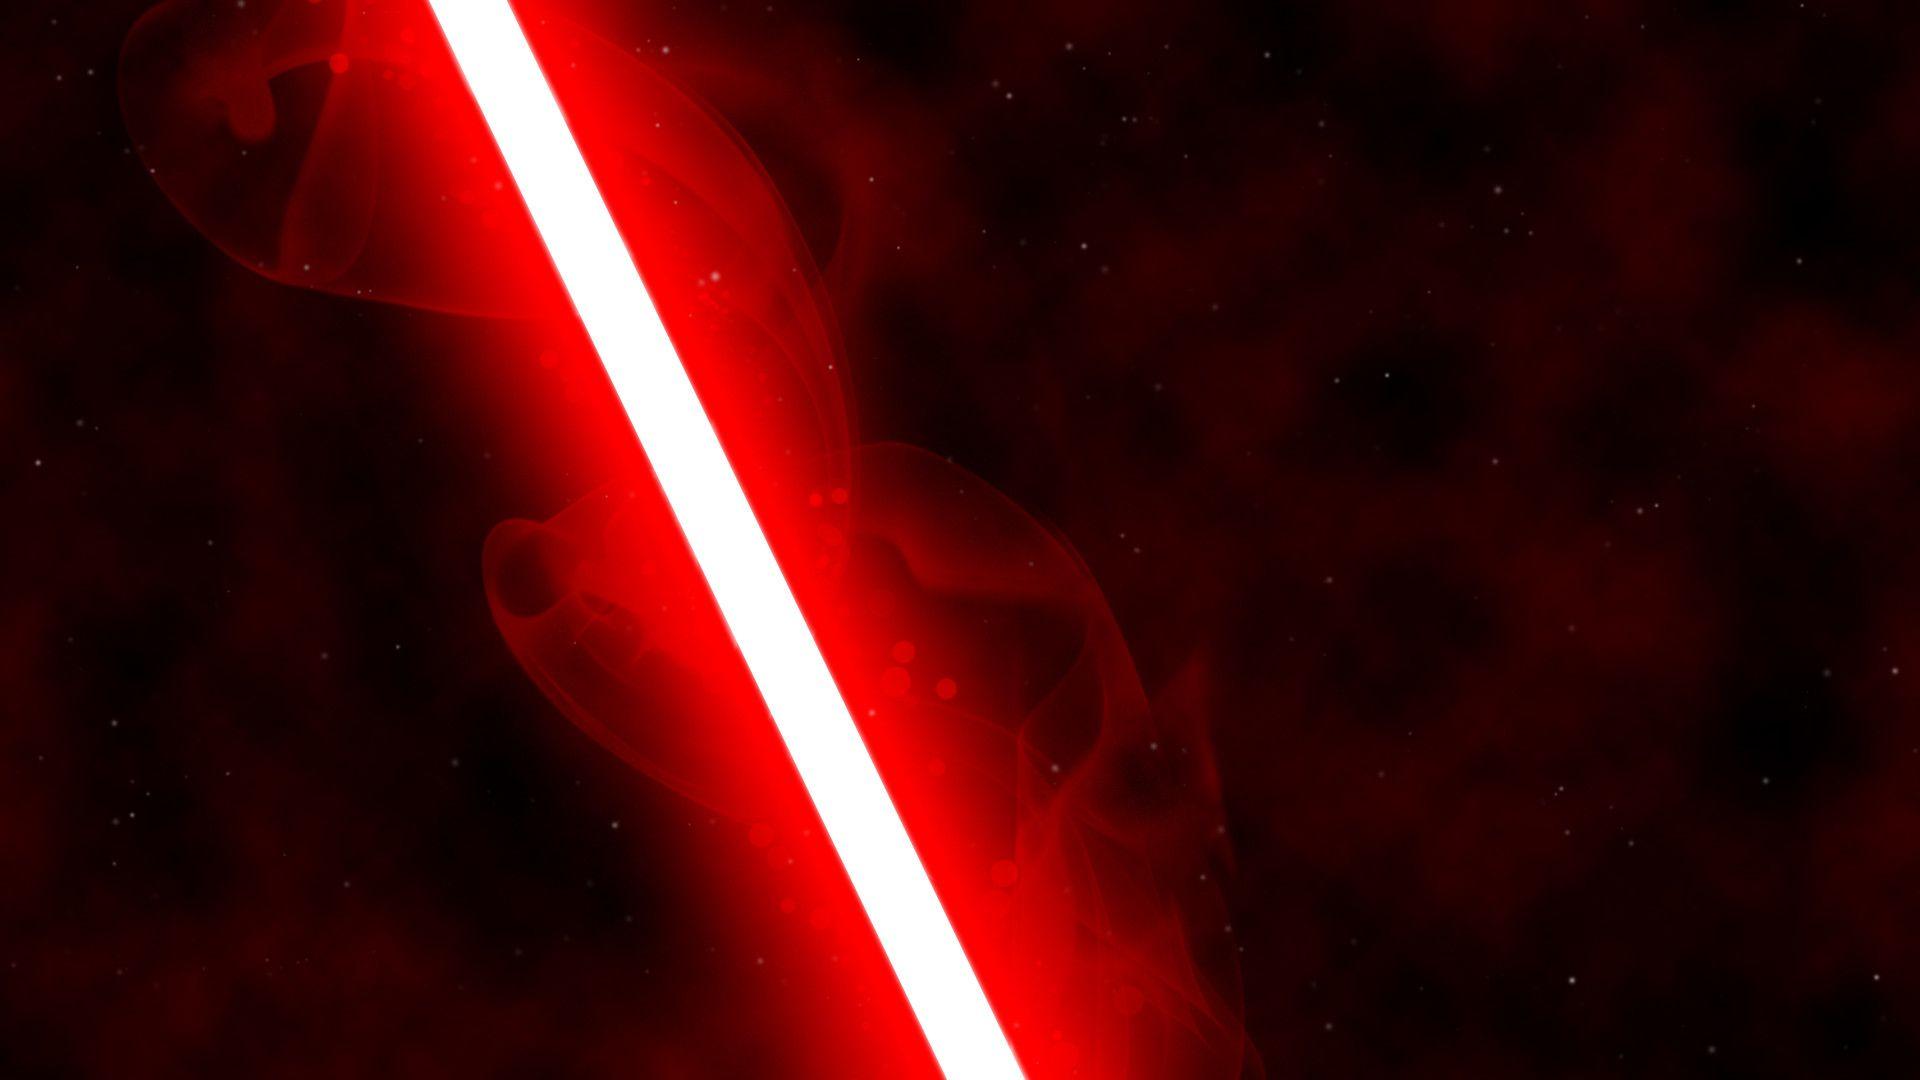 Kylo Ren  Poster by Star Wars  Displate  Star wars wallpaper Star wars  light saber Star wars poster